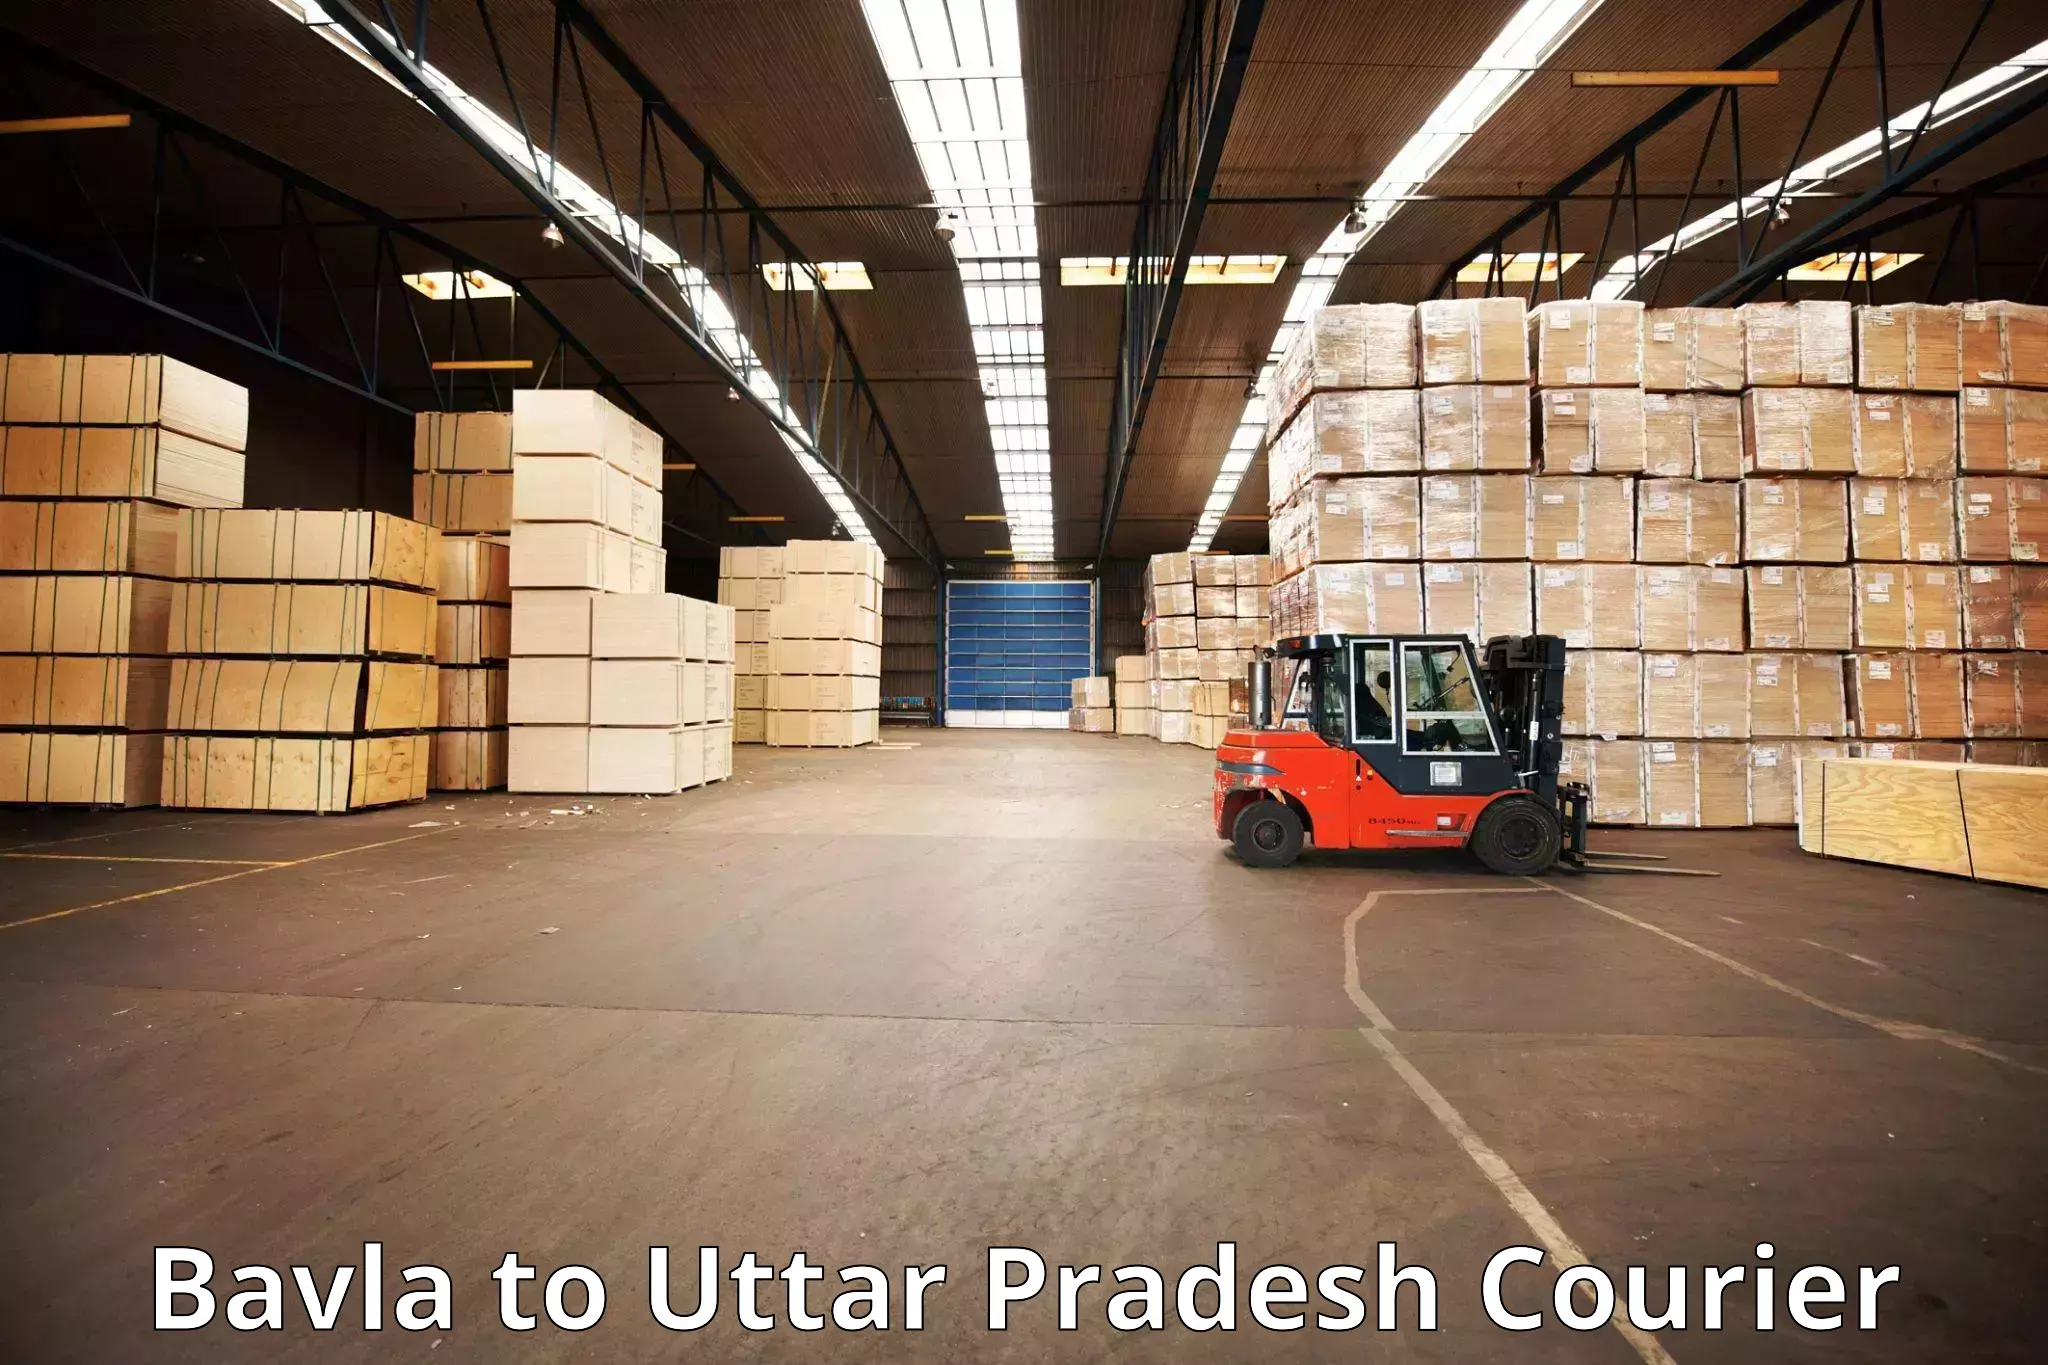 Luggage transport consultancy Bavla to Uttar Pradesh